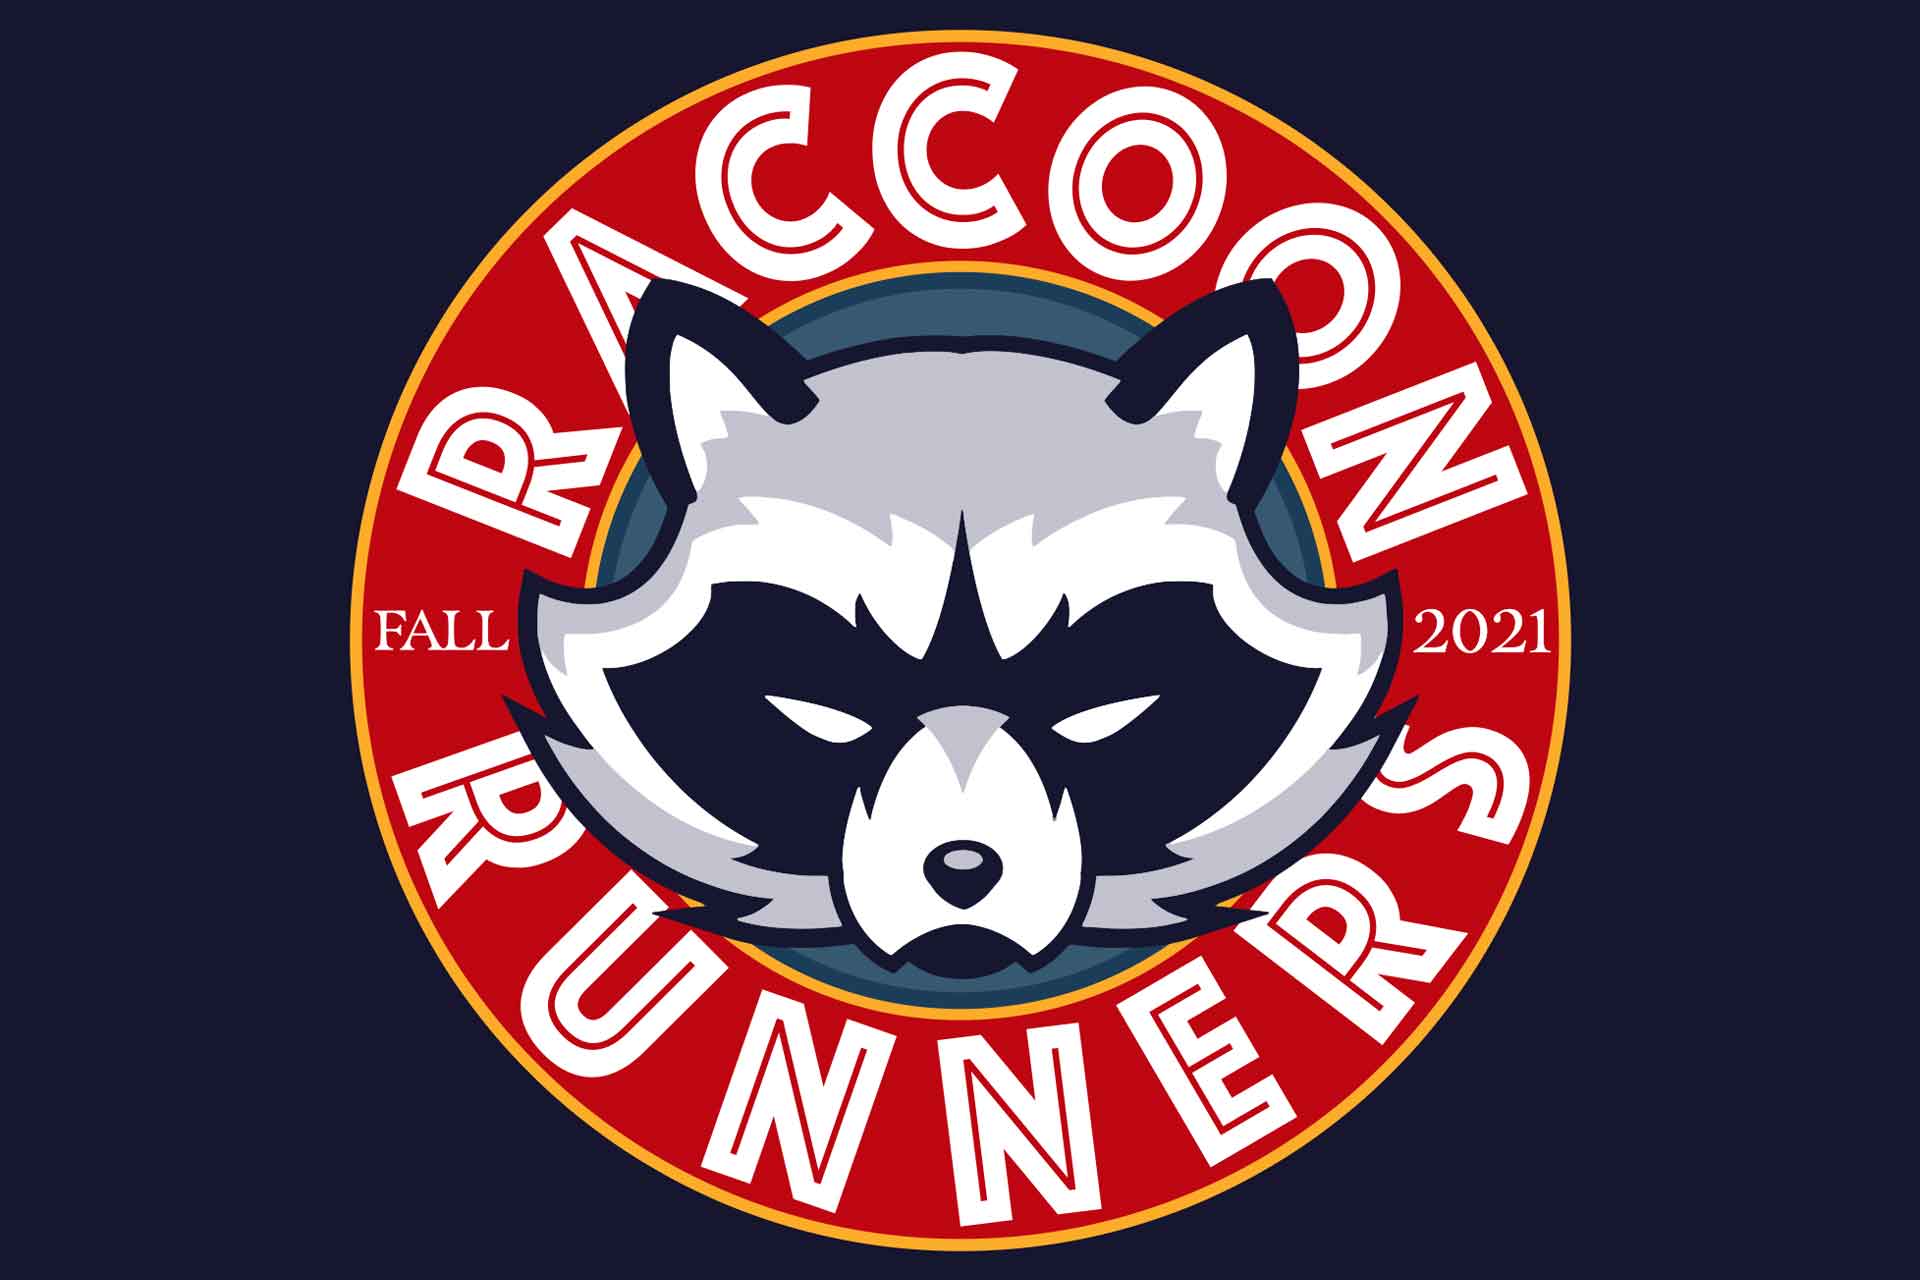 Raccoon Runners